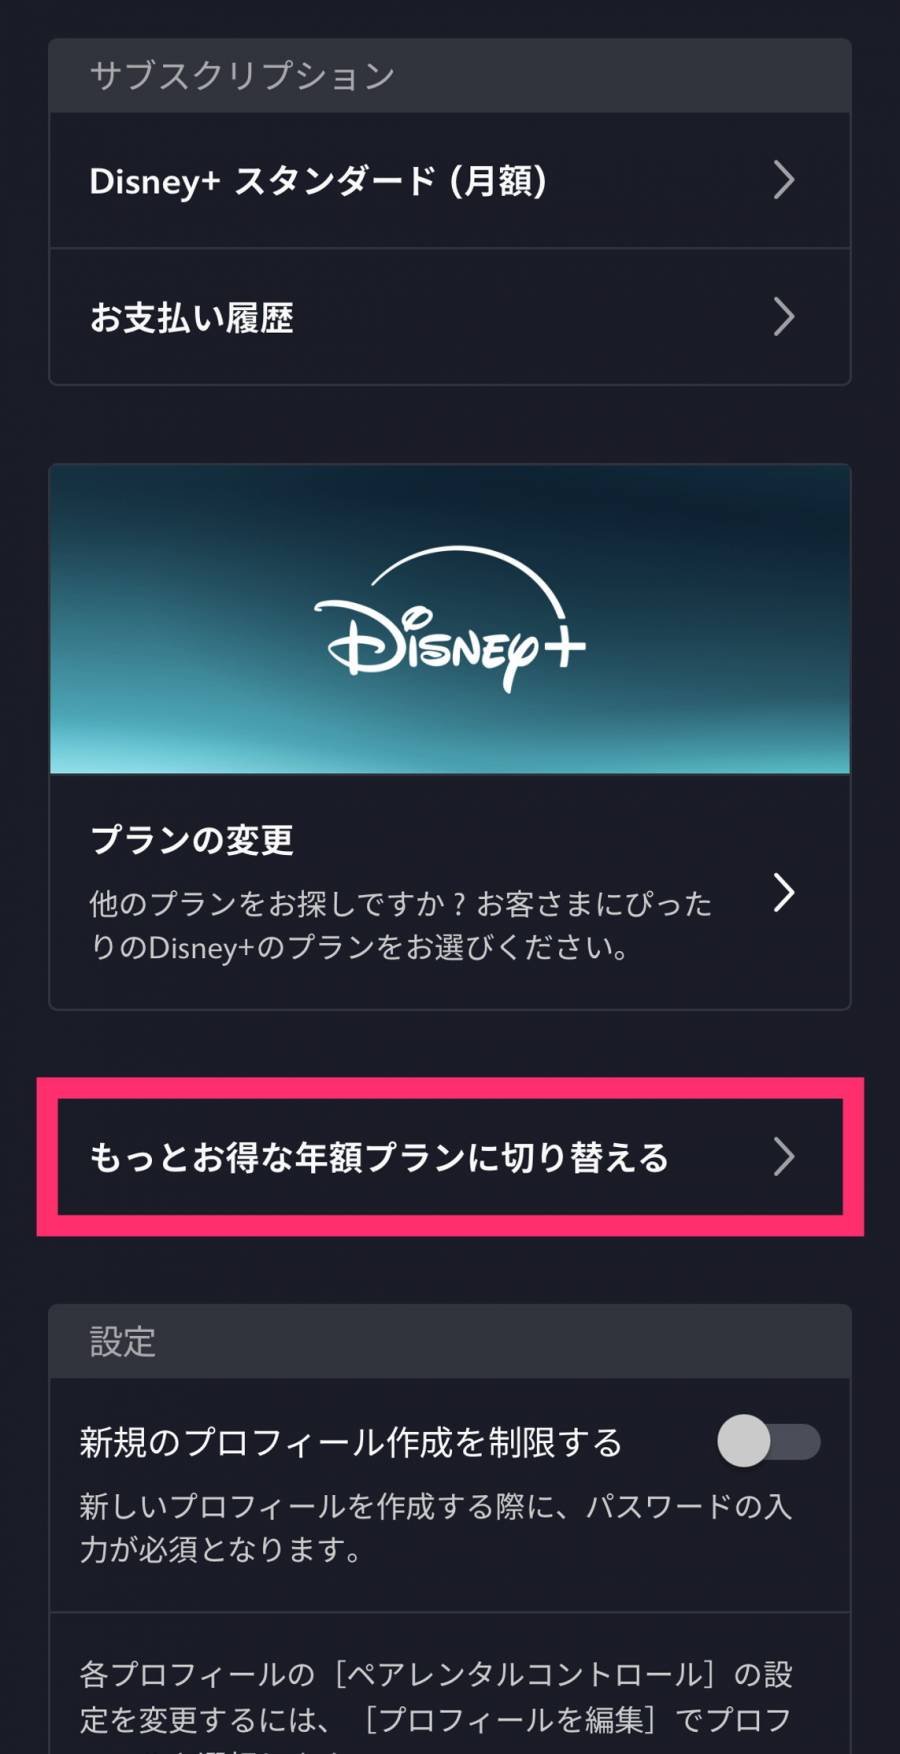 Disney+プラン選択ページの画像